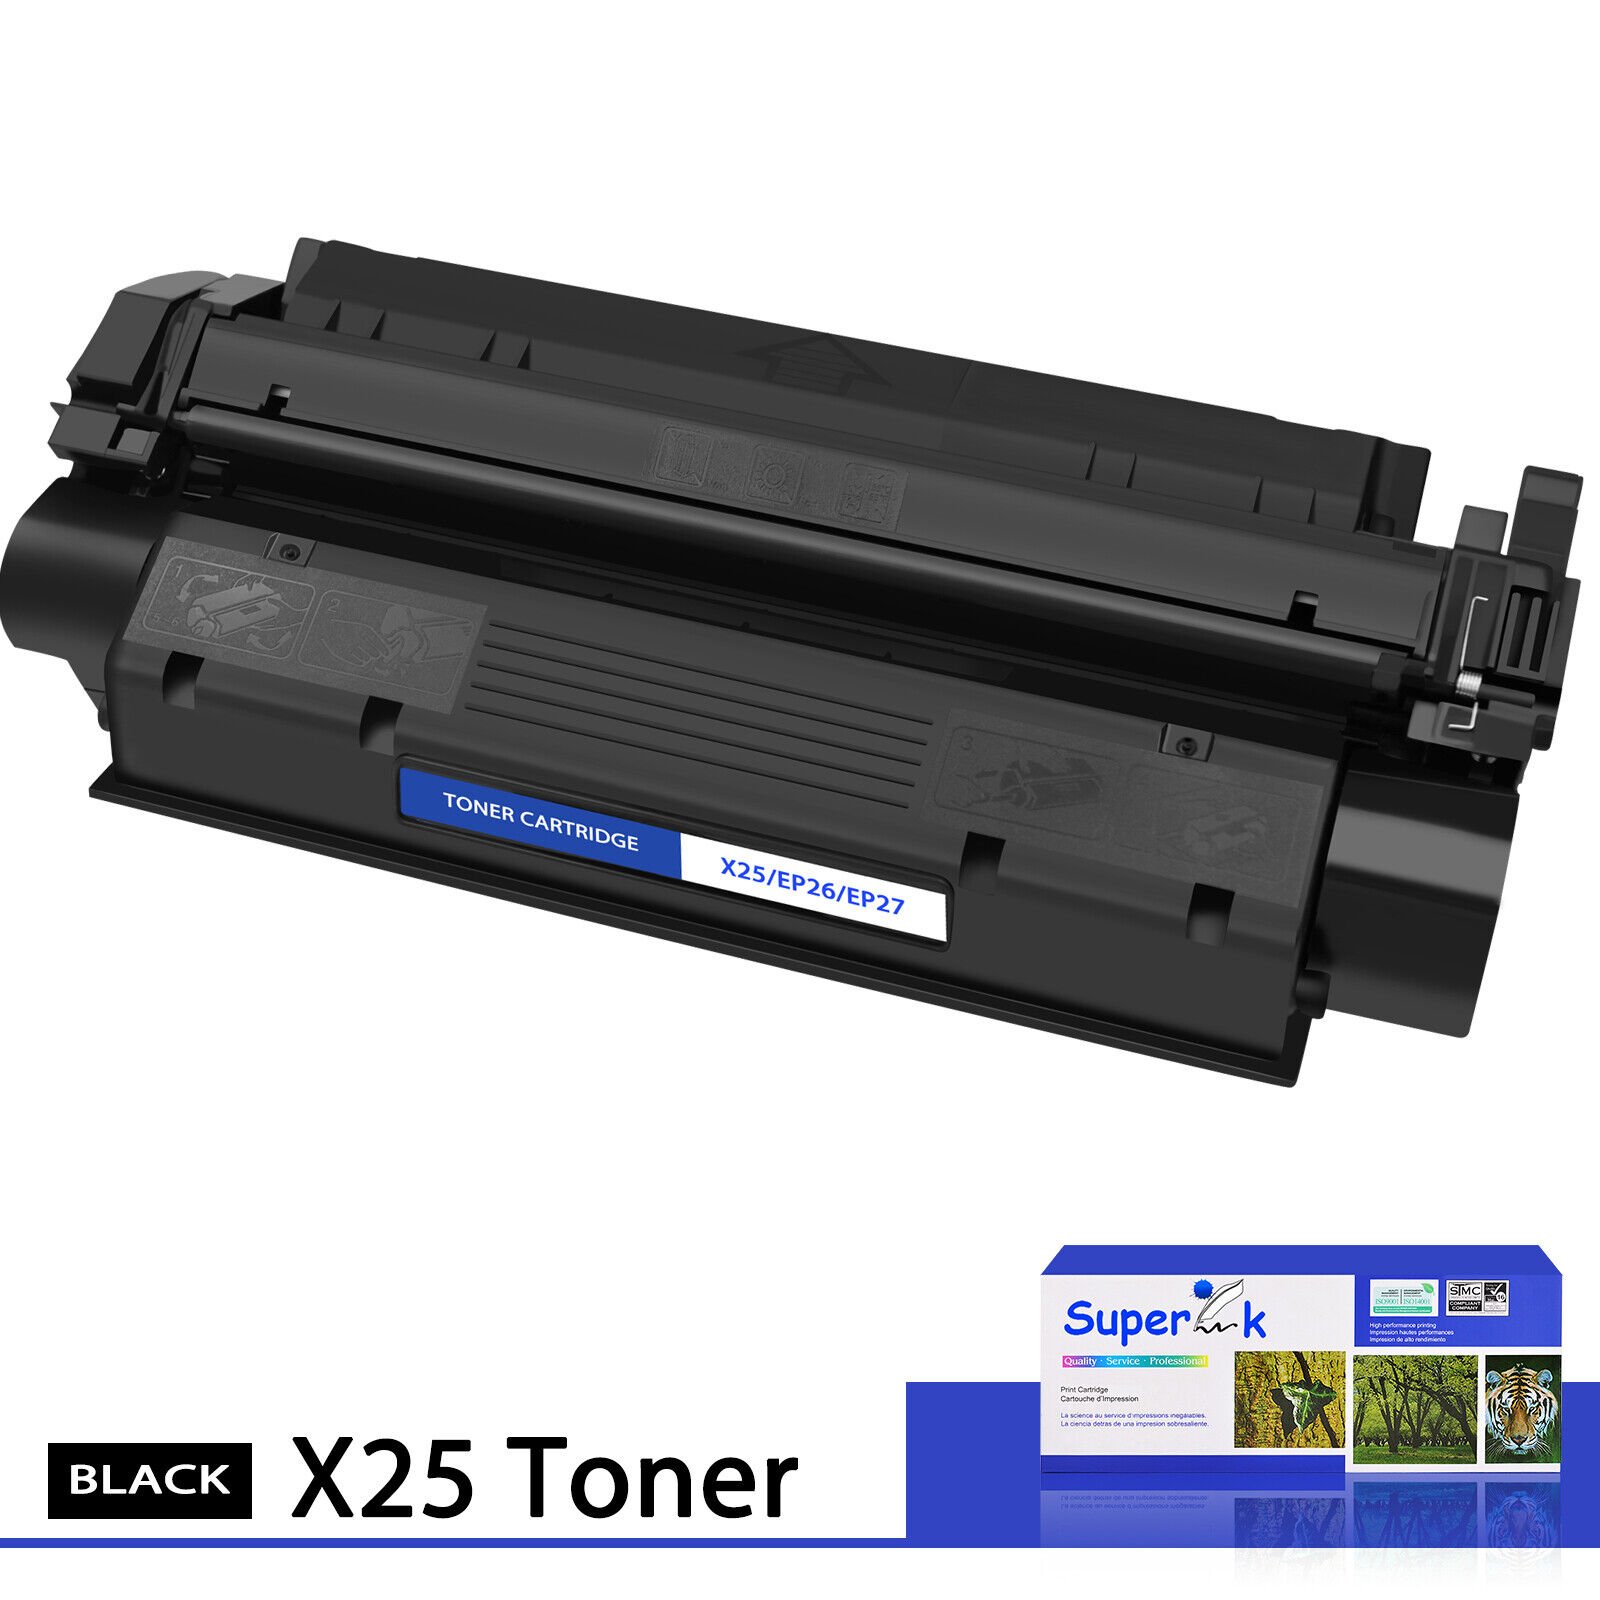 X25 Toner Cartridge for Canon ImageClass MF5770 MF5750 MF5730 MF5530 MF3240 LOT